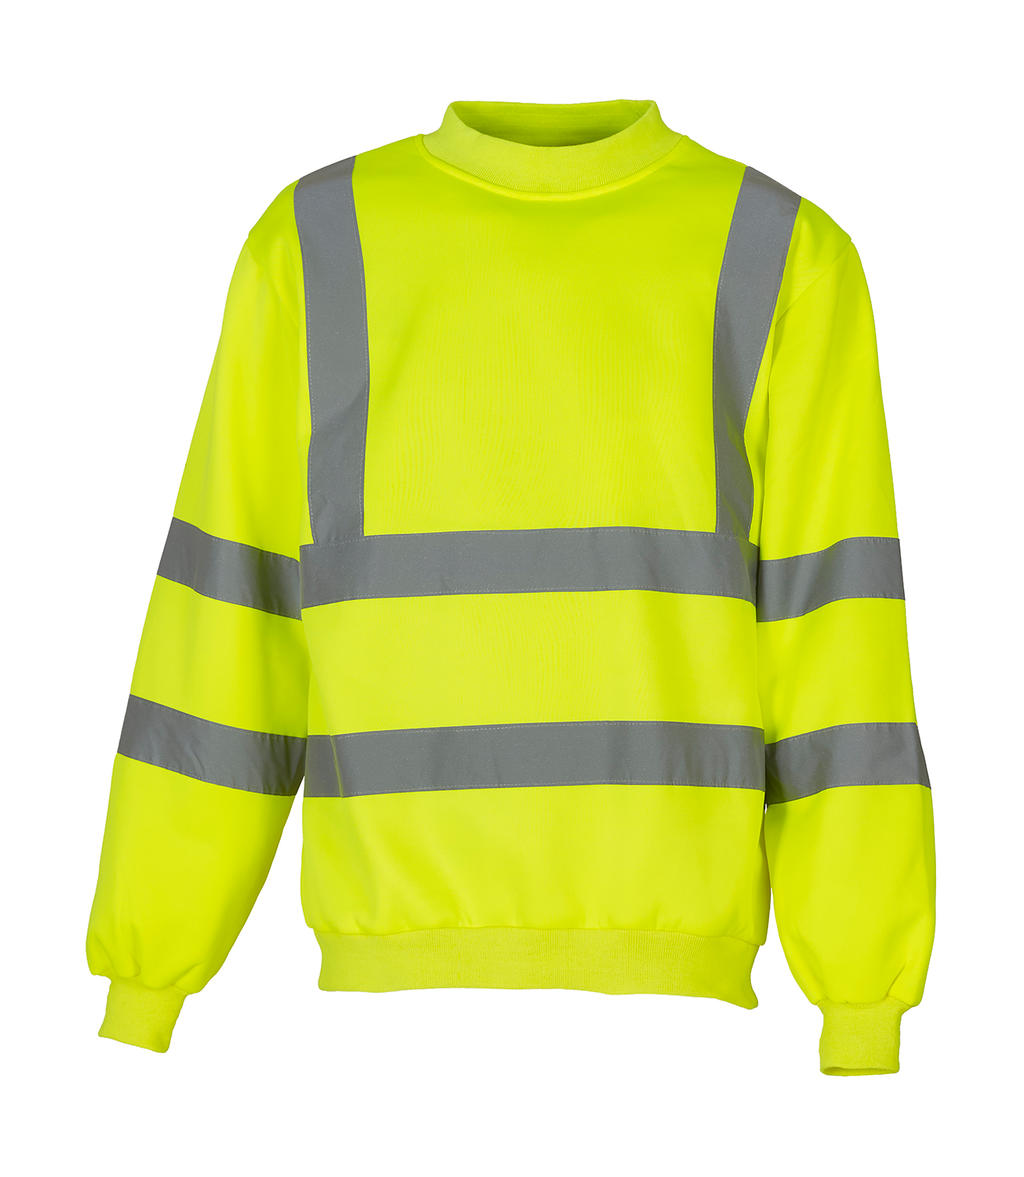  Fluo Sweatshirt in Farbe Fluo Yellow